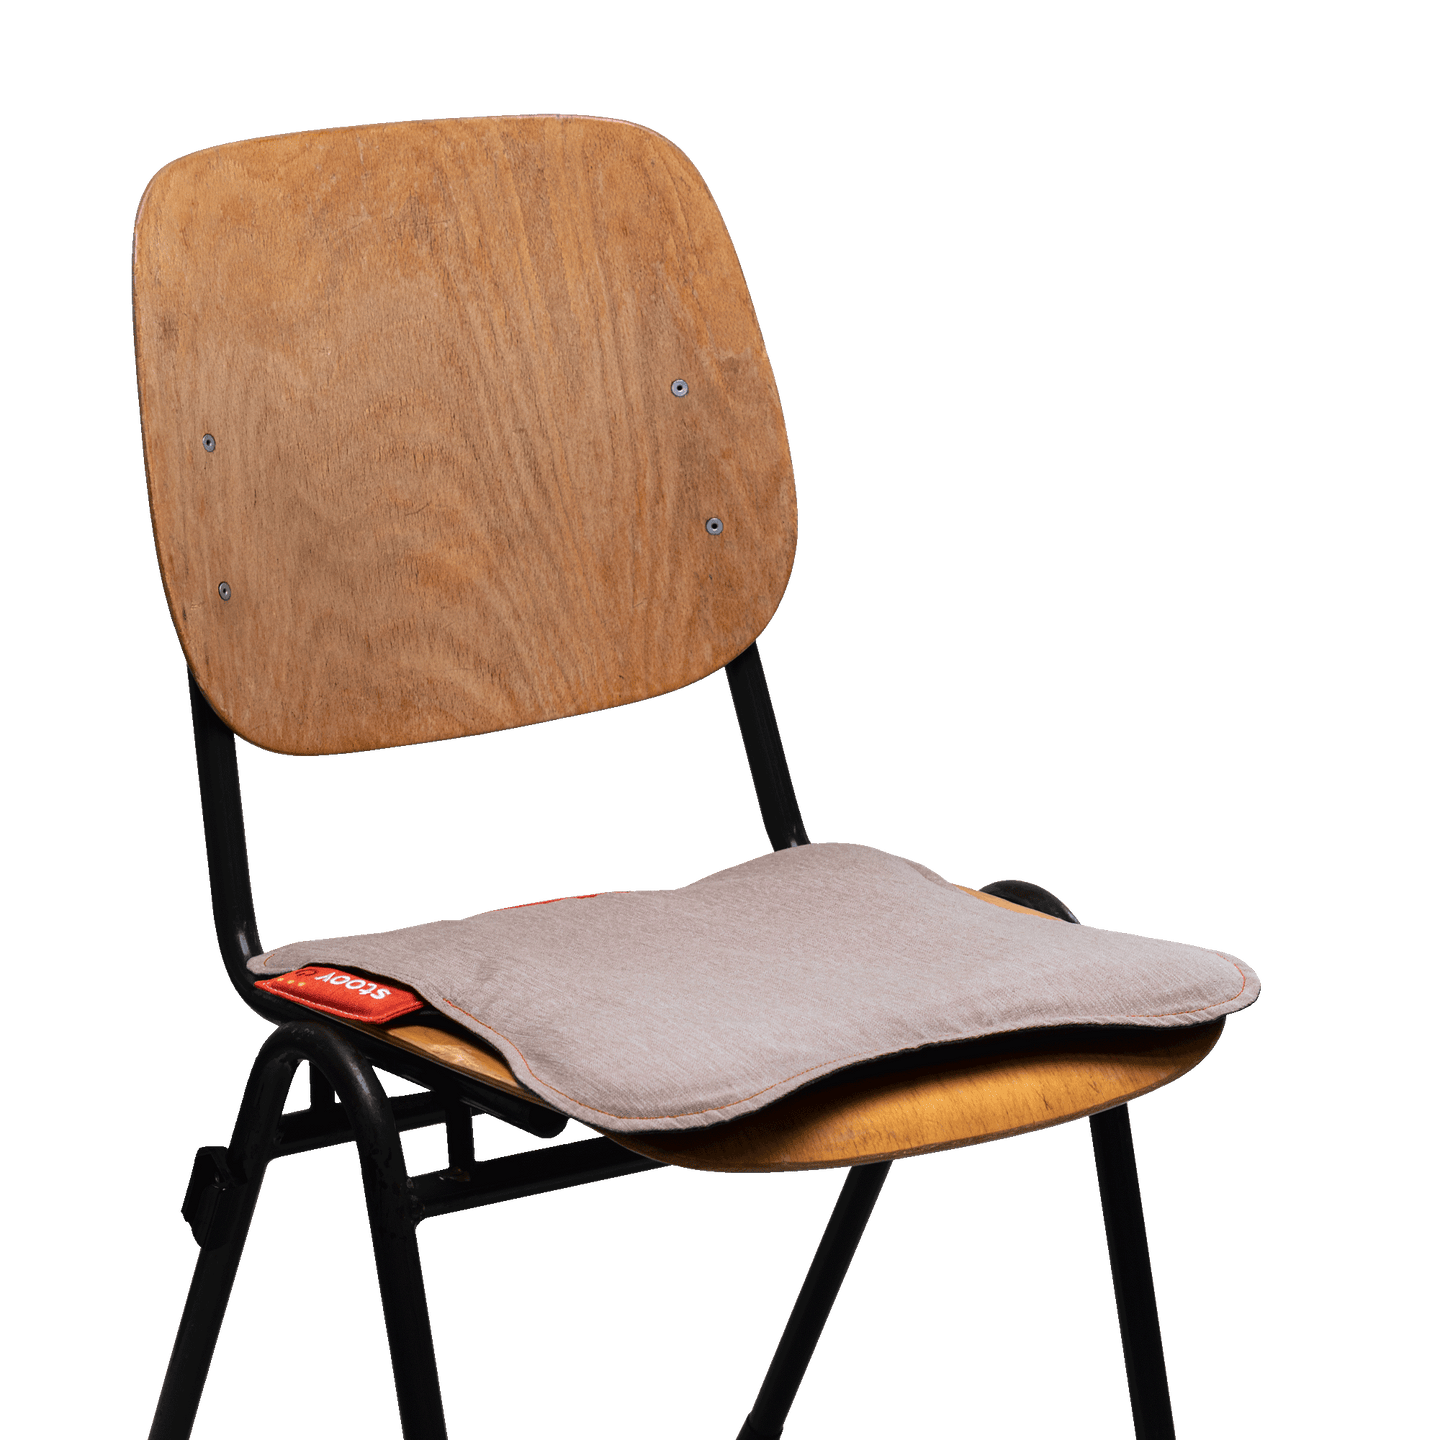 Warmtepad Pro 42x42 Outdoor Taupe stoel zitvlak